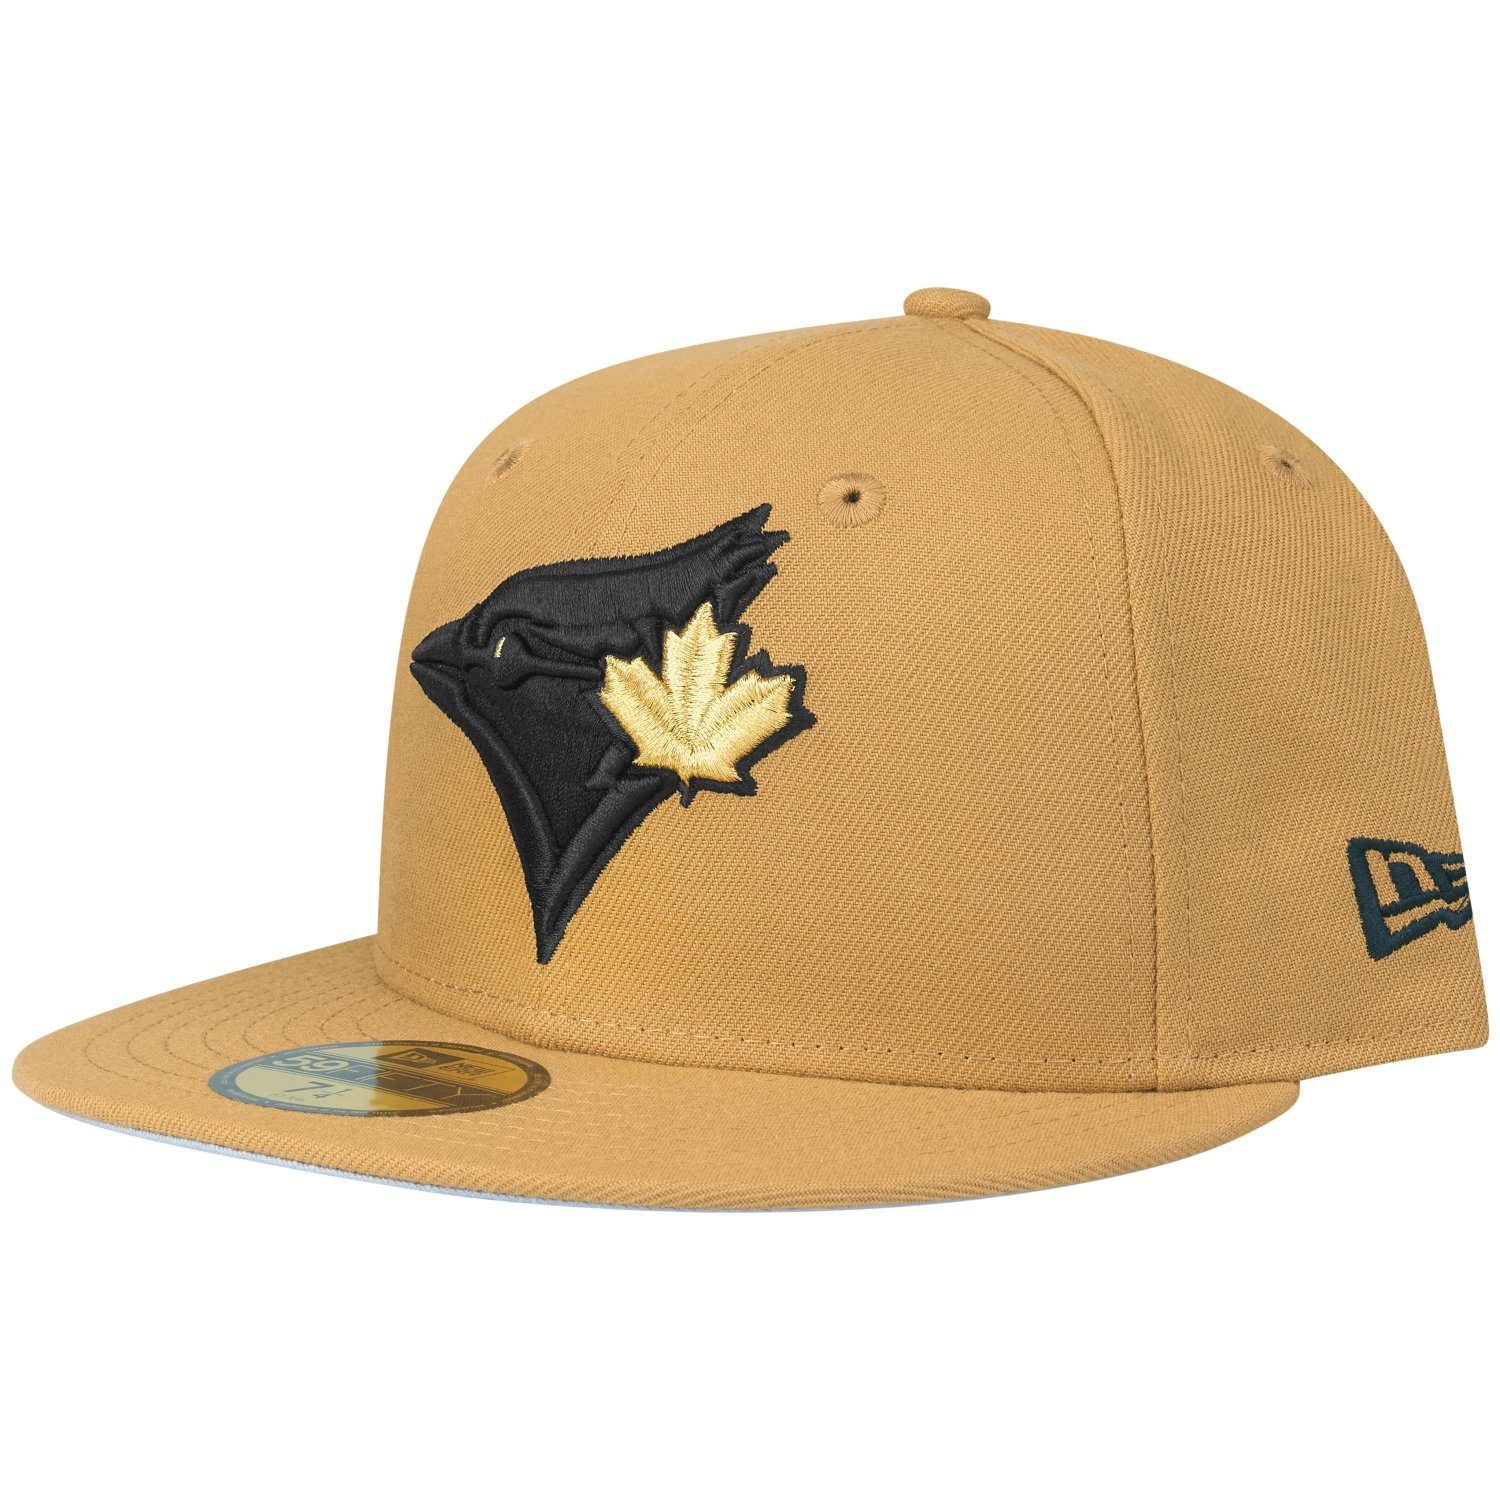 New Era Fitted Cap 59Fifty Toronto Jays panama